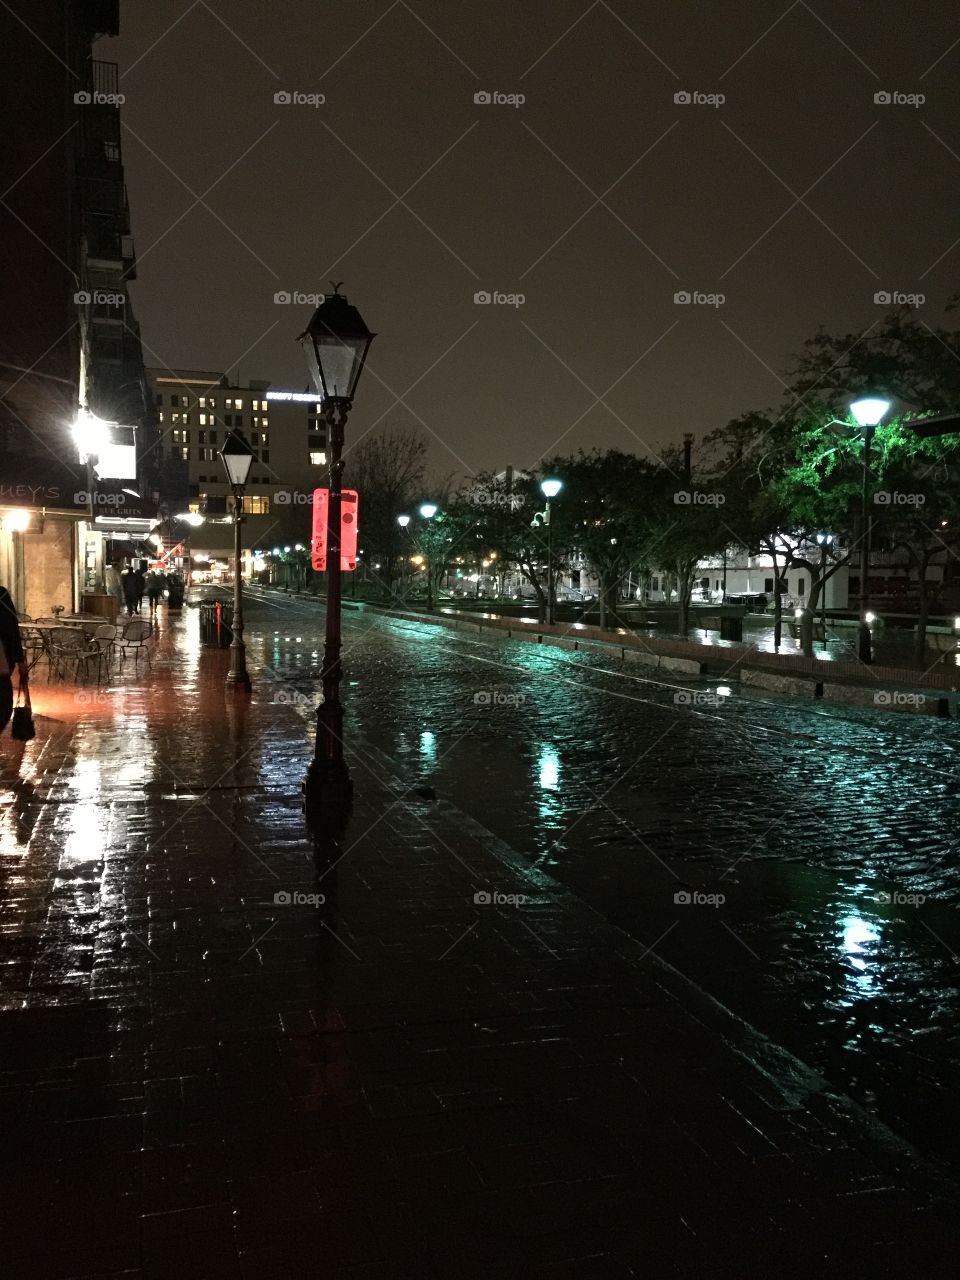 City streets of Savannah Ga night time after rain